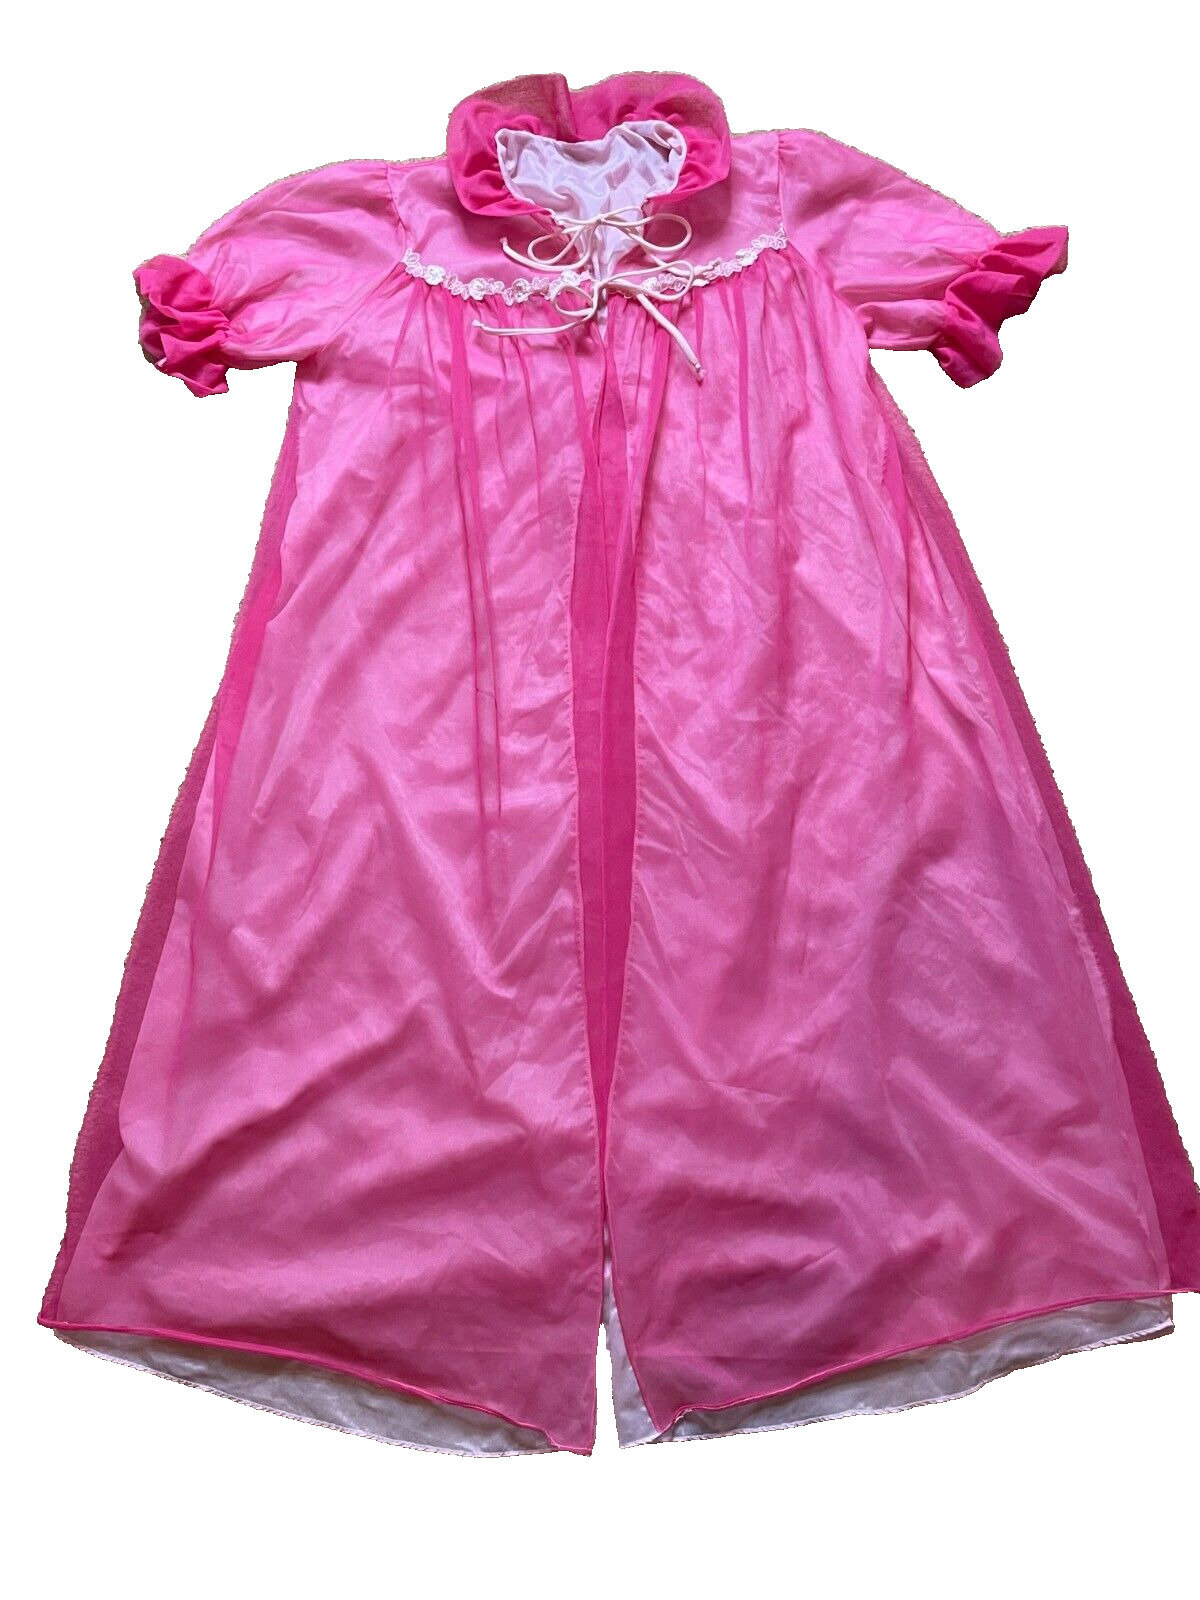 Vintage 60s MCM Barbiecore Nylon USA Pink Peignoir Robe Housecoat Negligee M